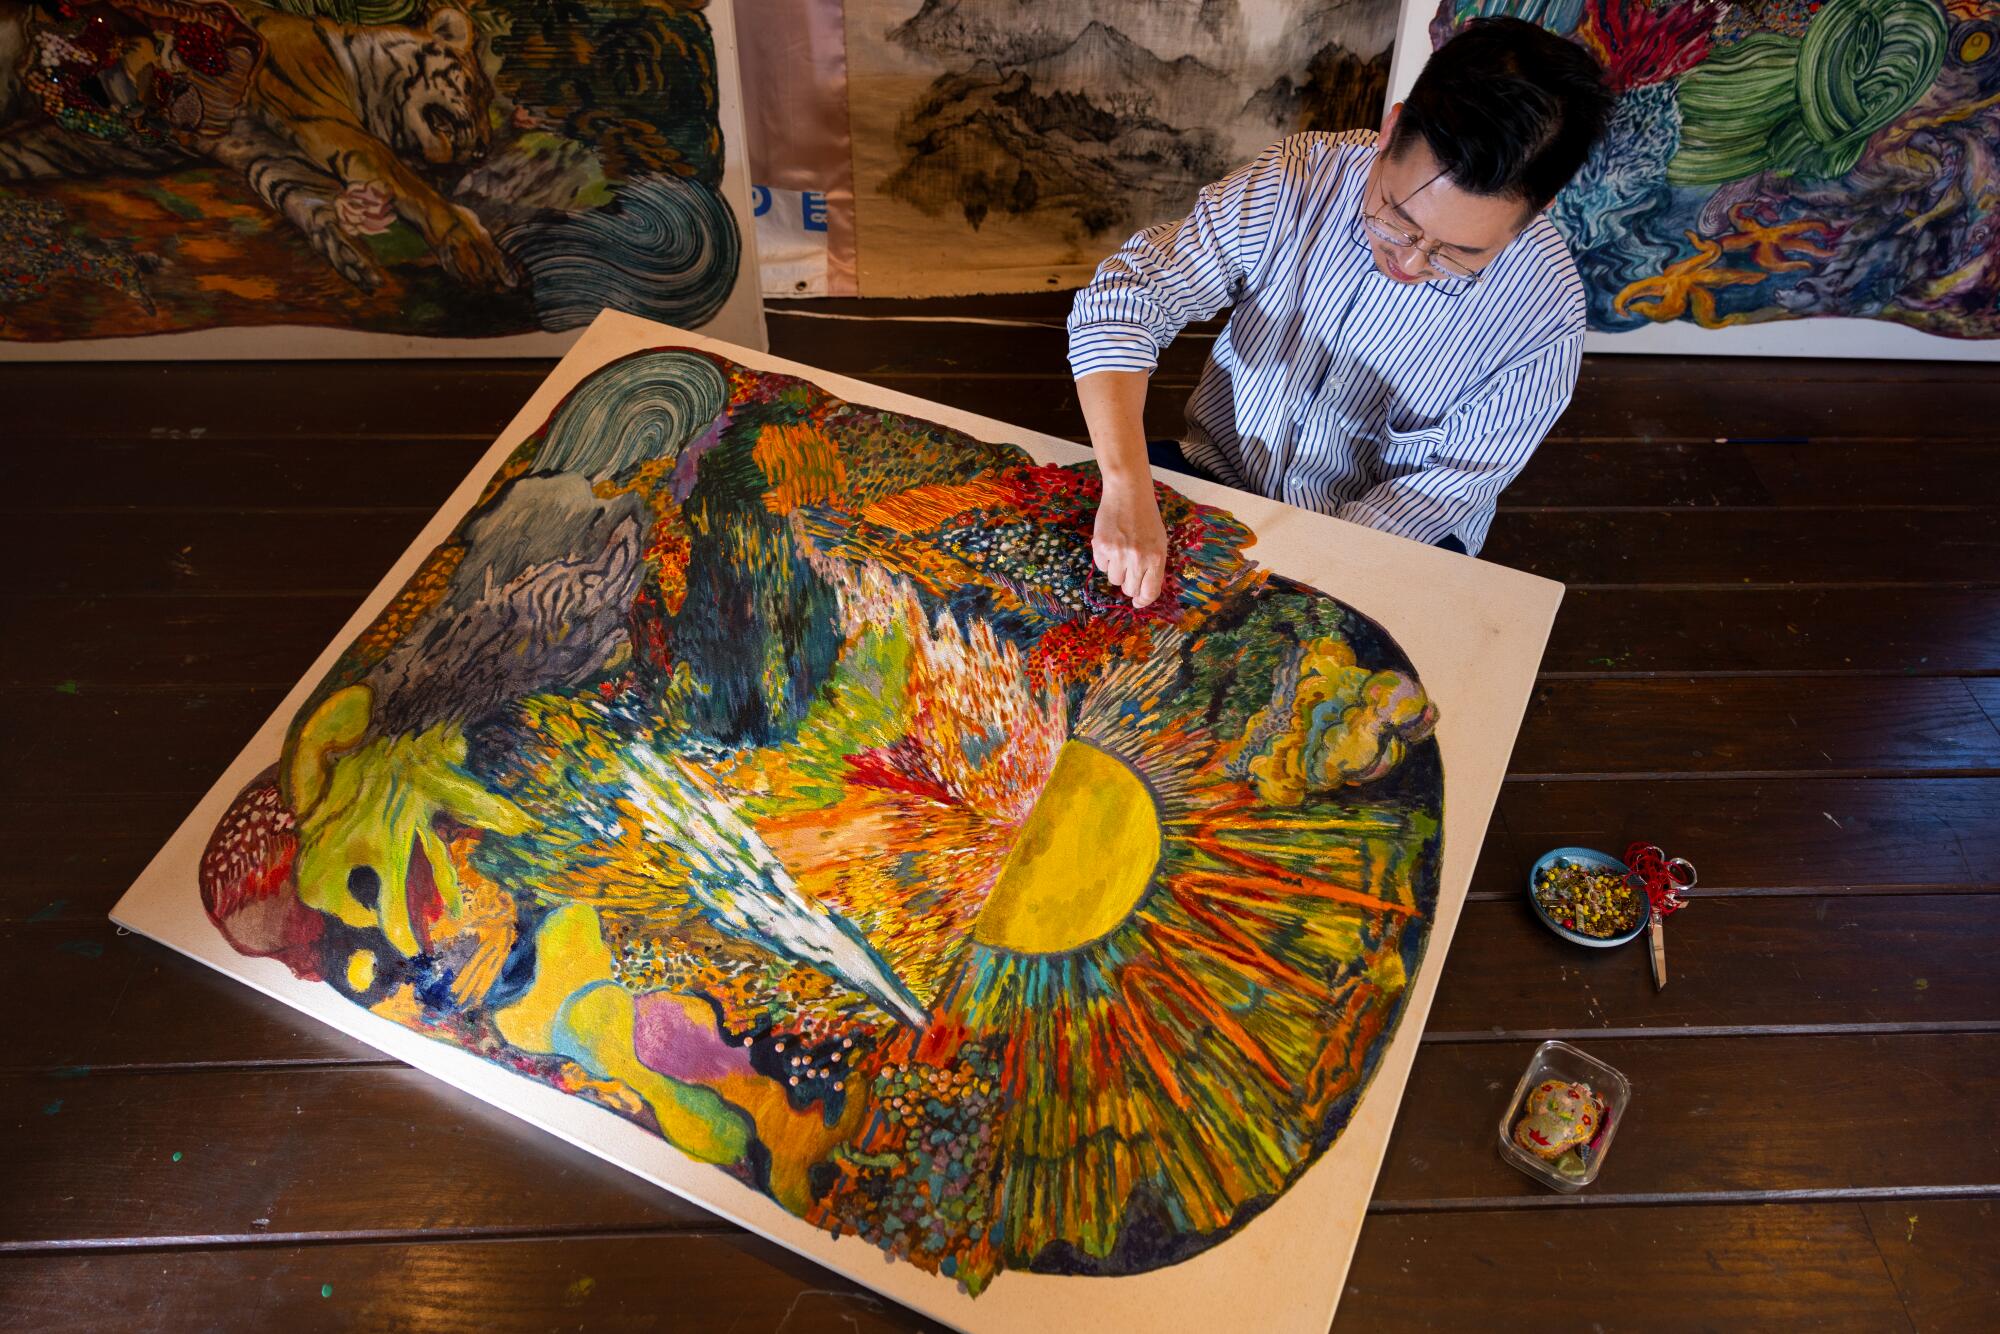 Artist Ken Gun Min hand embroiders his painting